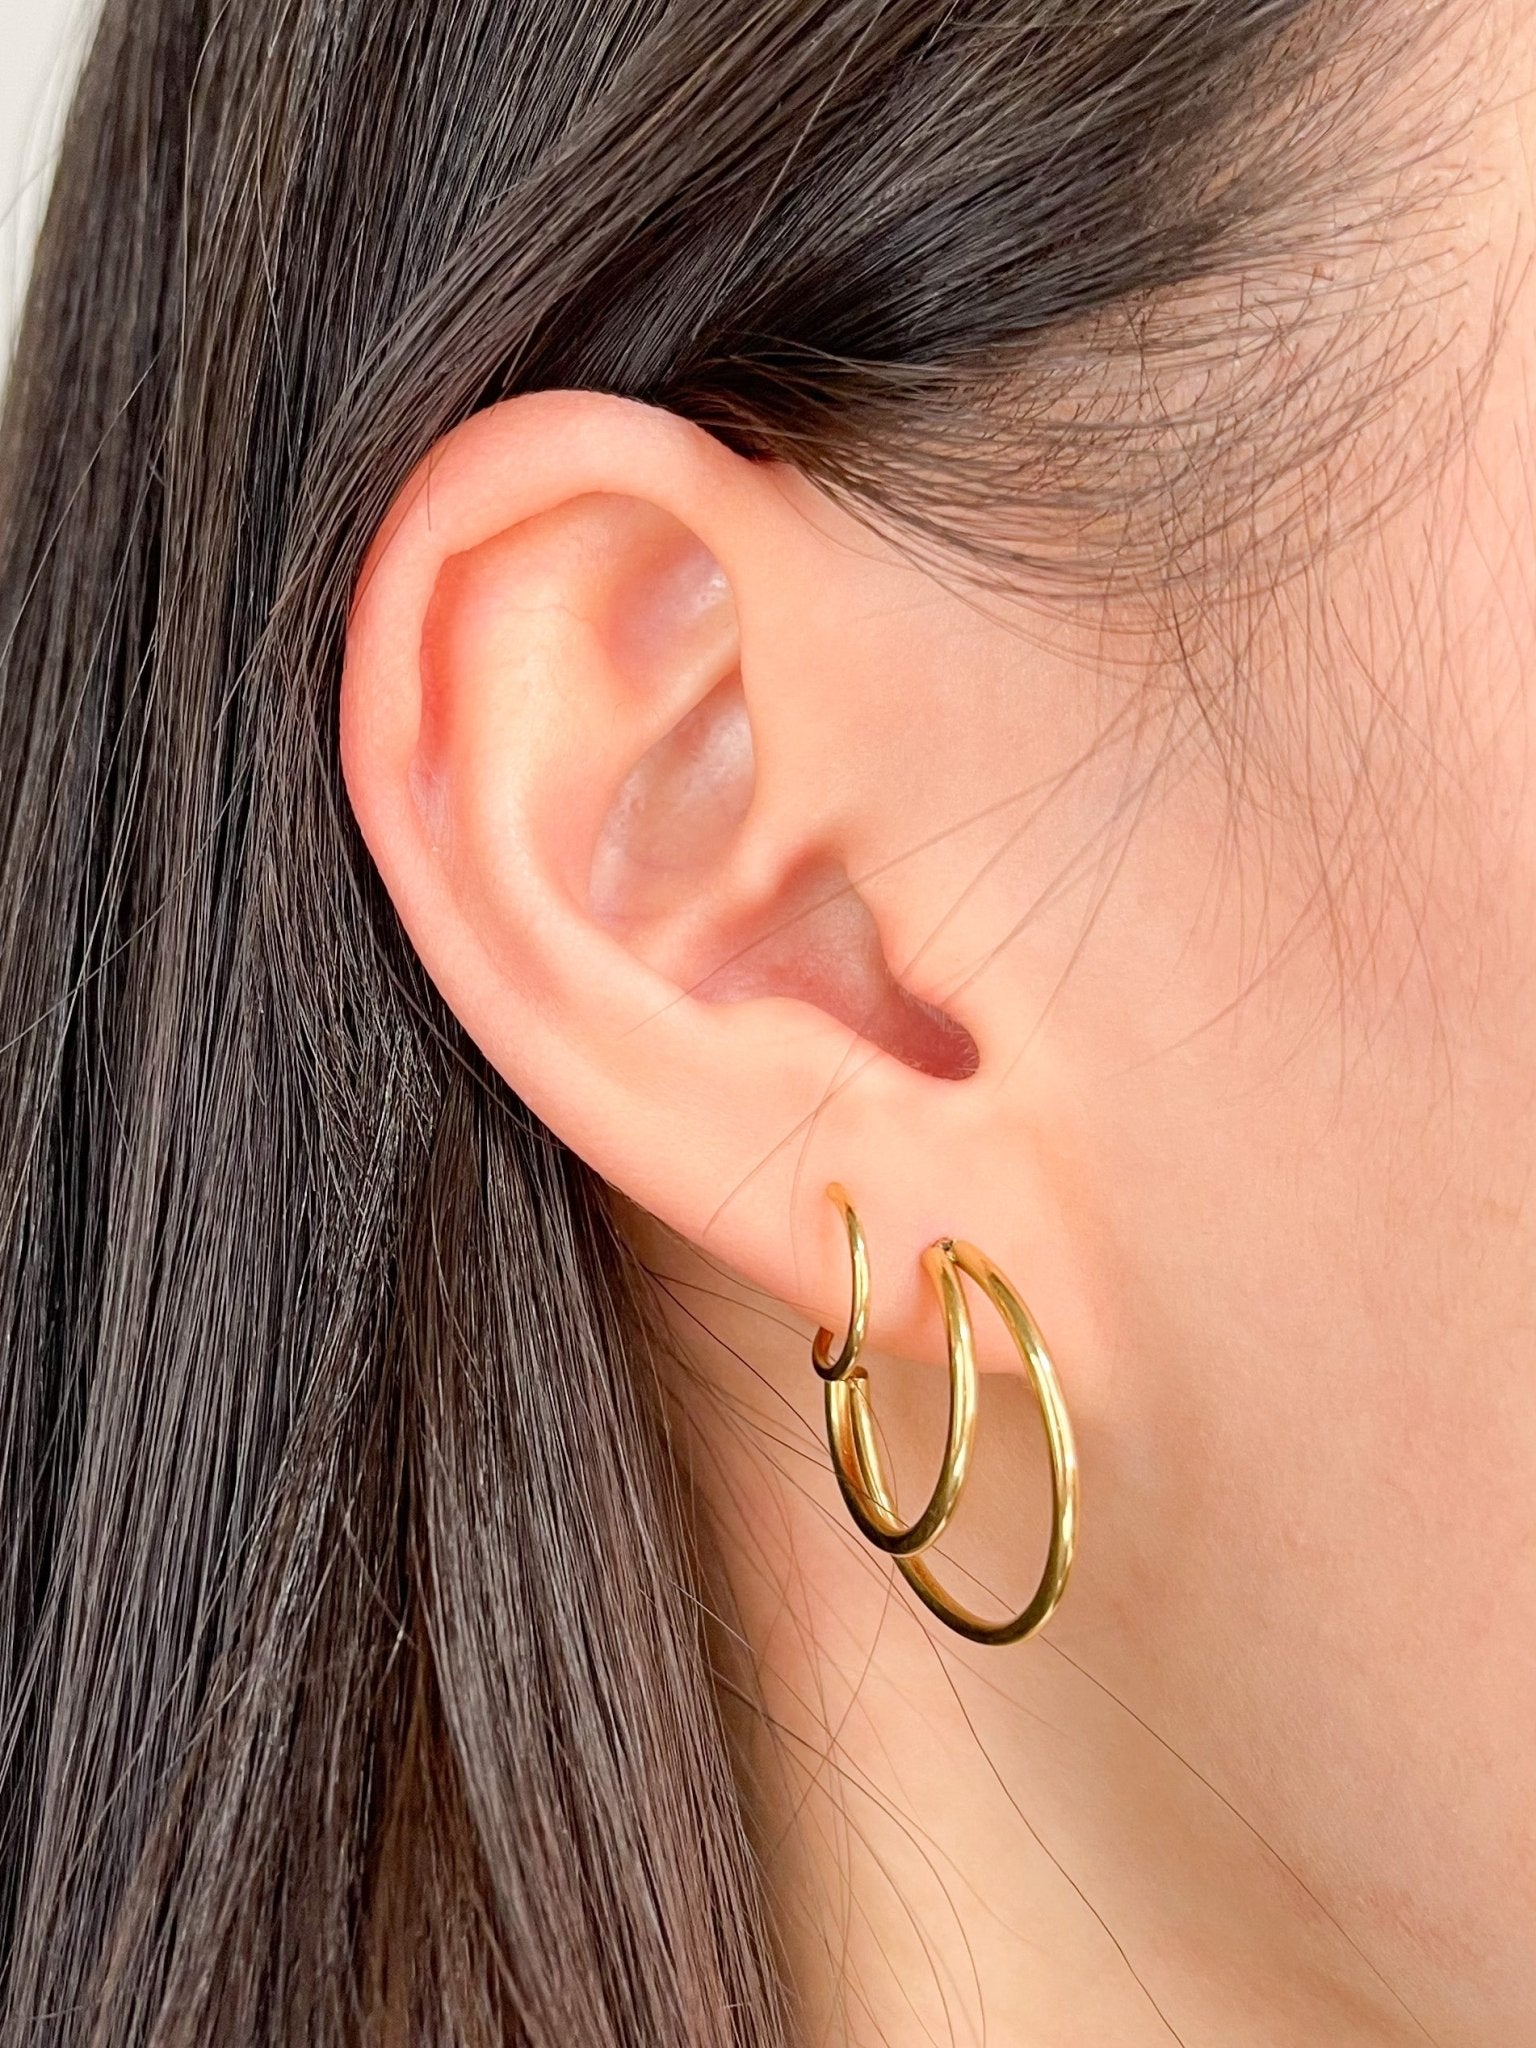 Jessica Faux Triple Hoop Earrings in Gold - Flaire & Co.